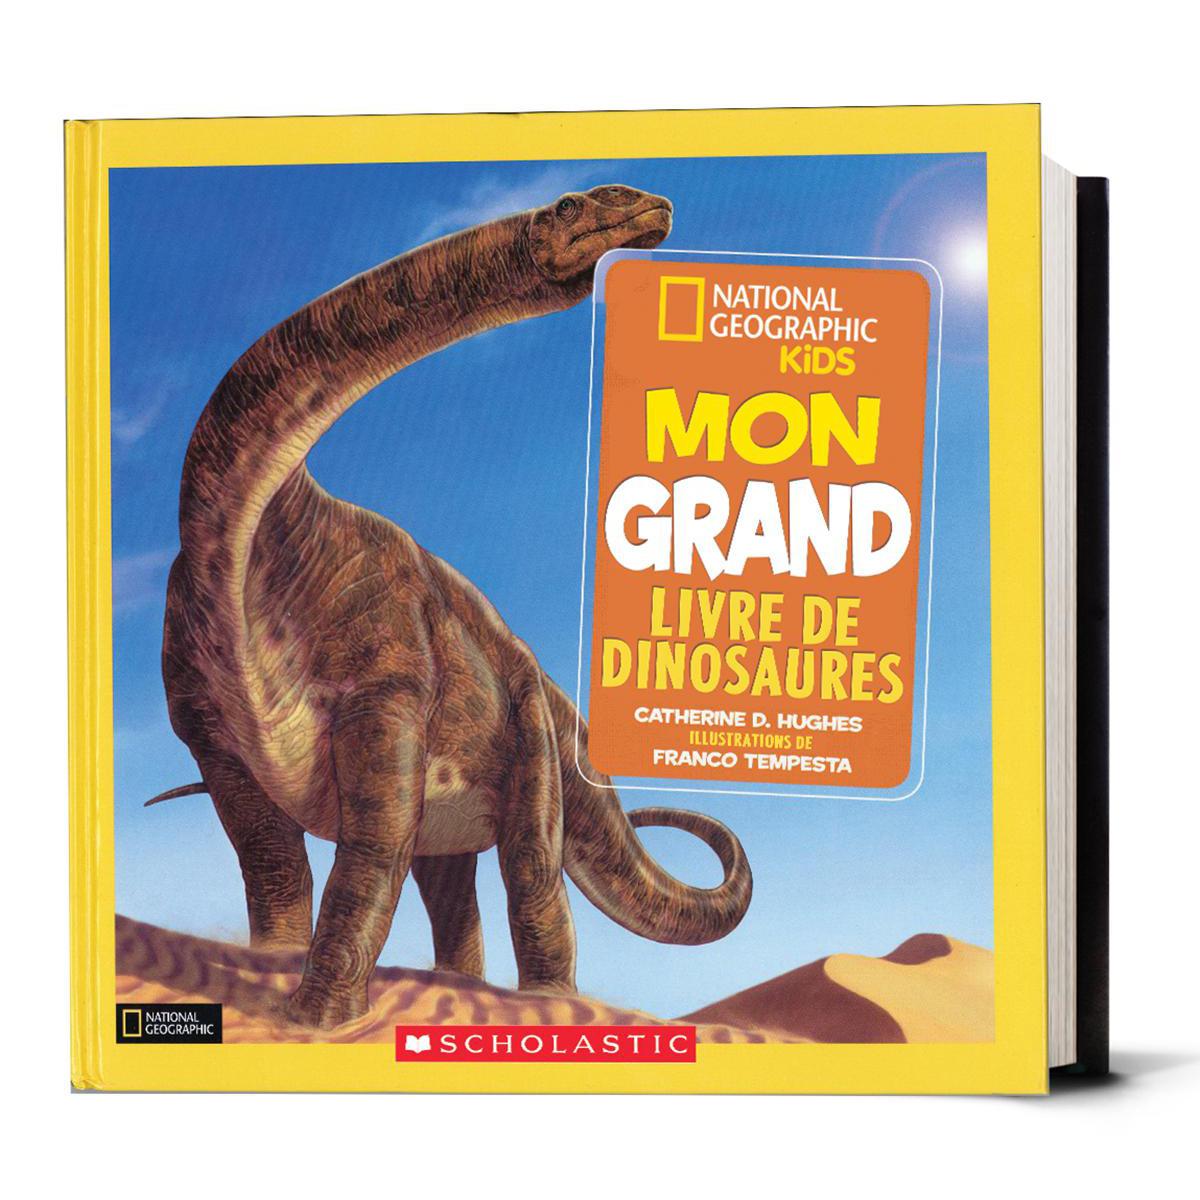  National Geographic Kids : Mon grand livre de dinosaures 